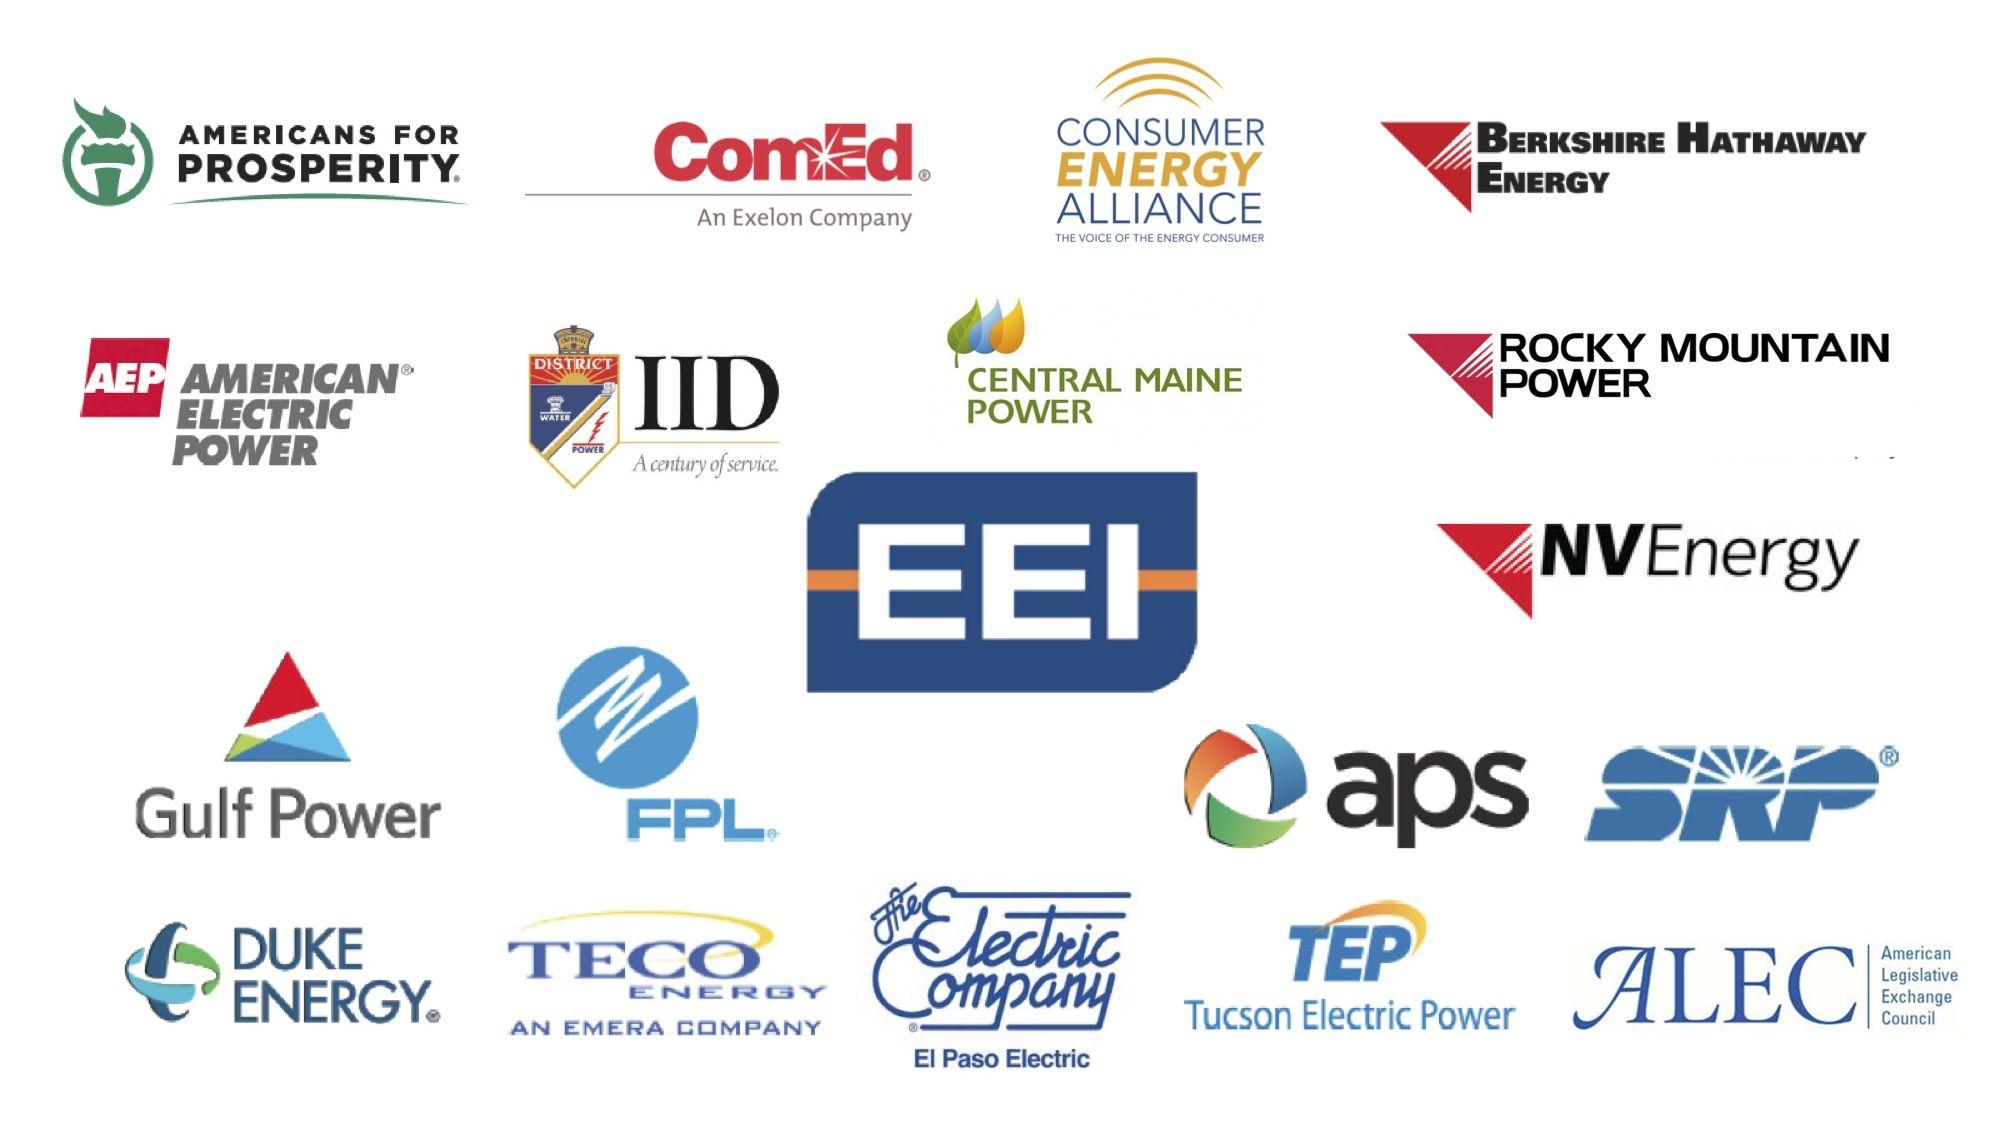 American Electrical Power Company Logo - Blocking